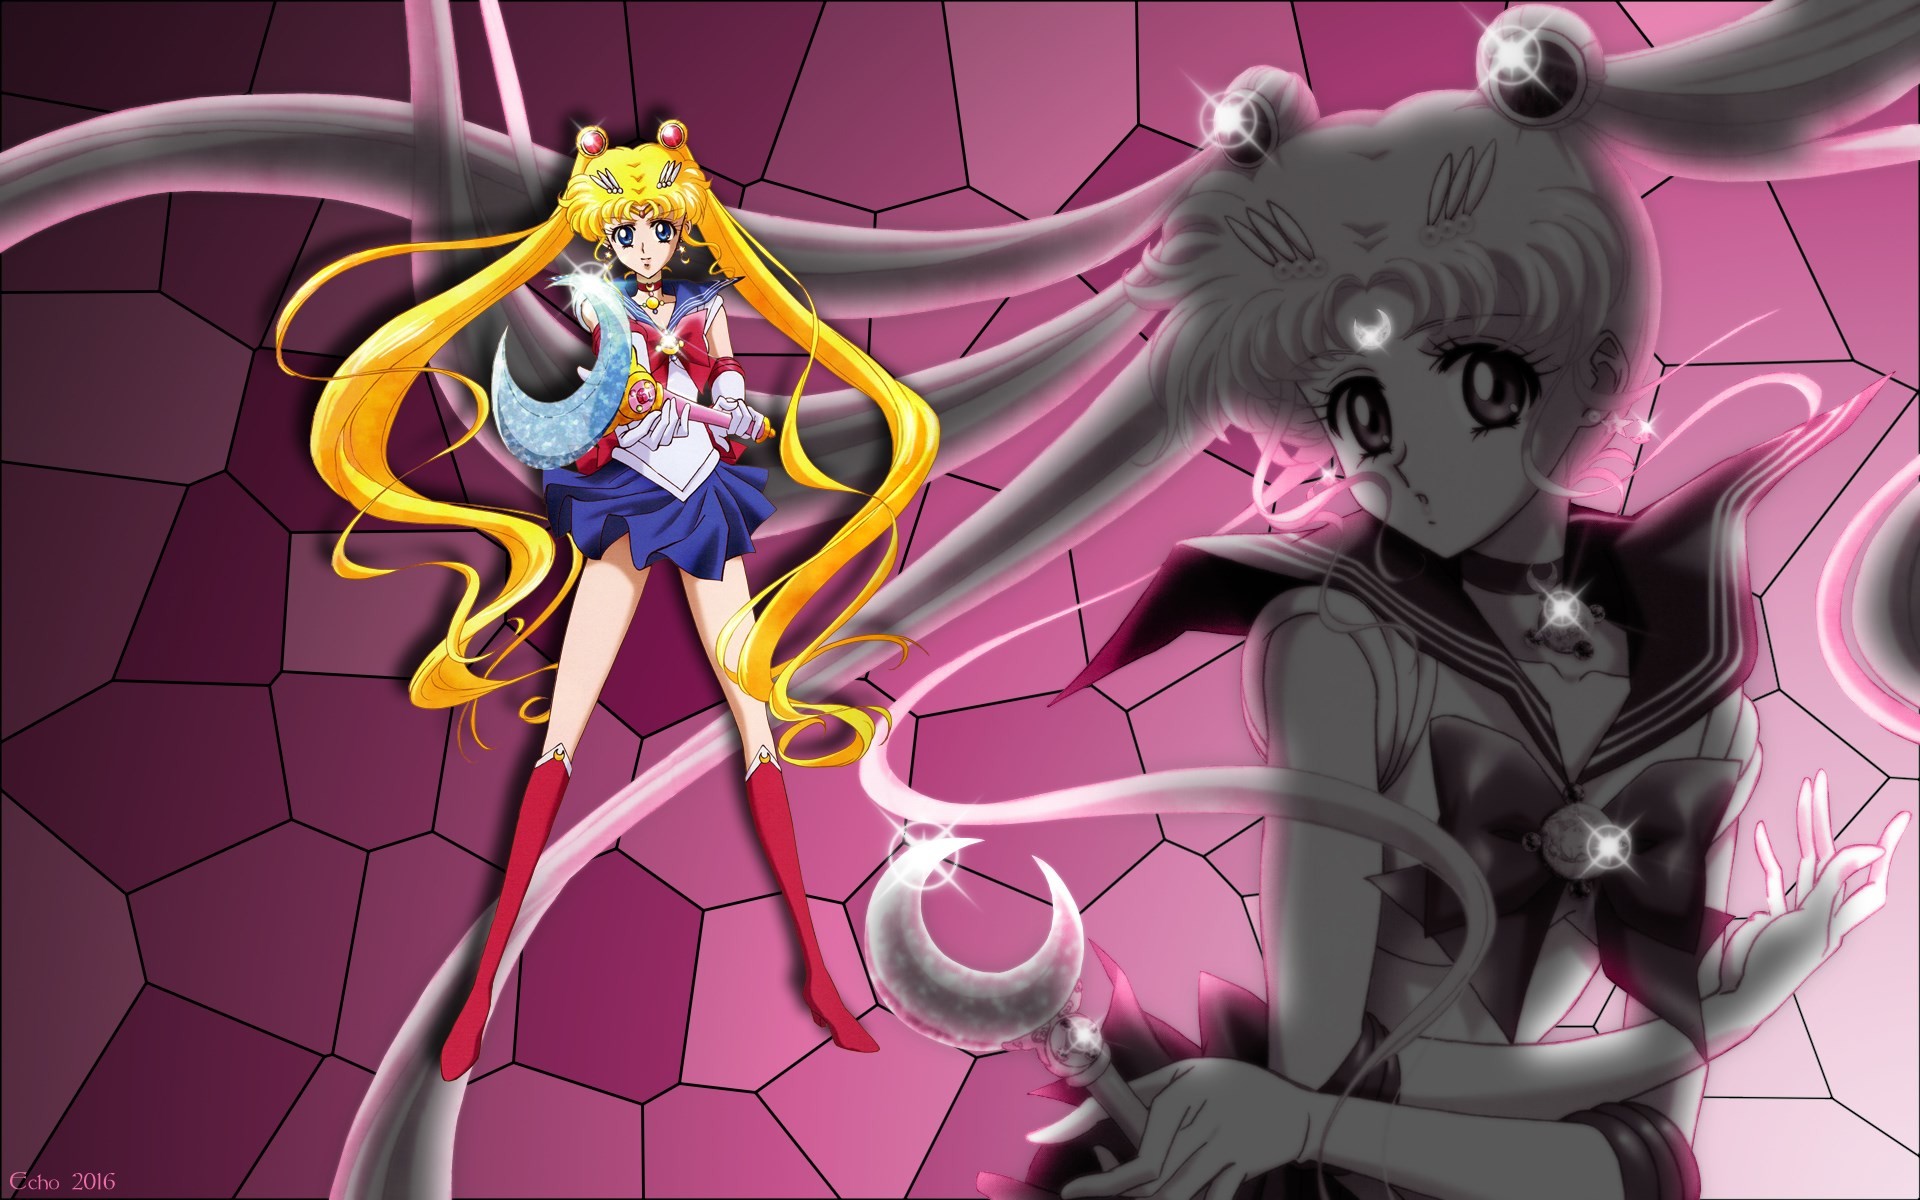 Download Sailor Moon Desktop Wallpaper  Sailor Moon Minimalist Desktop PNG  Image with No Background  PNGkeycom